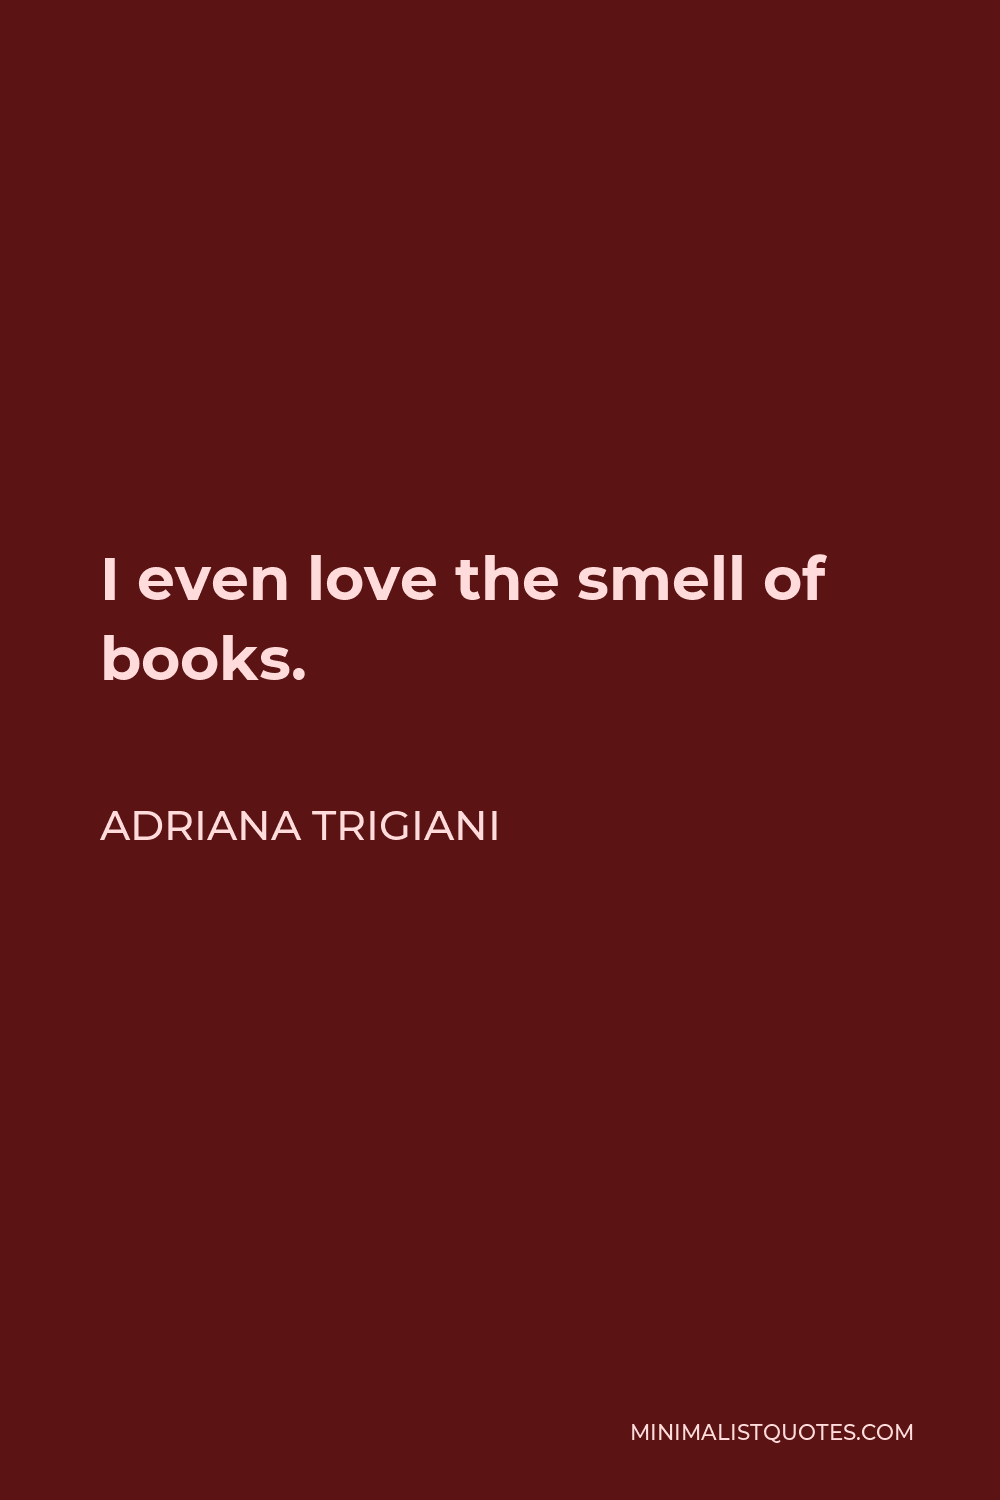 Adriana Trigiani Quote - I even love the smell of books.